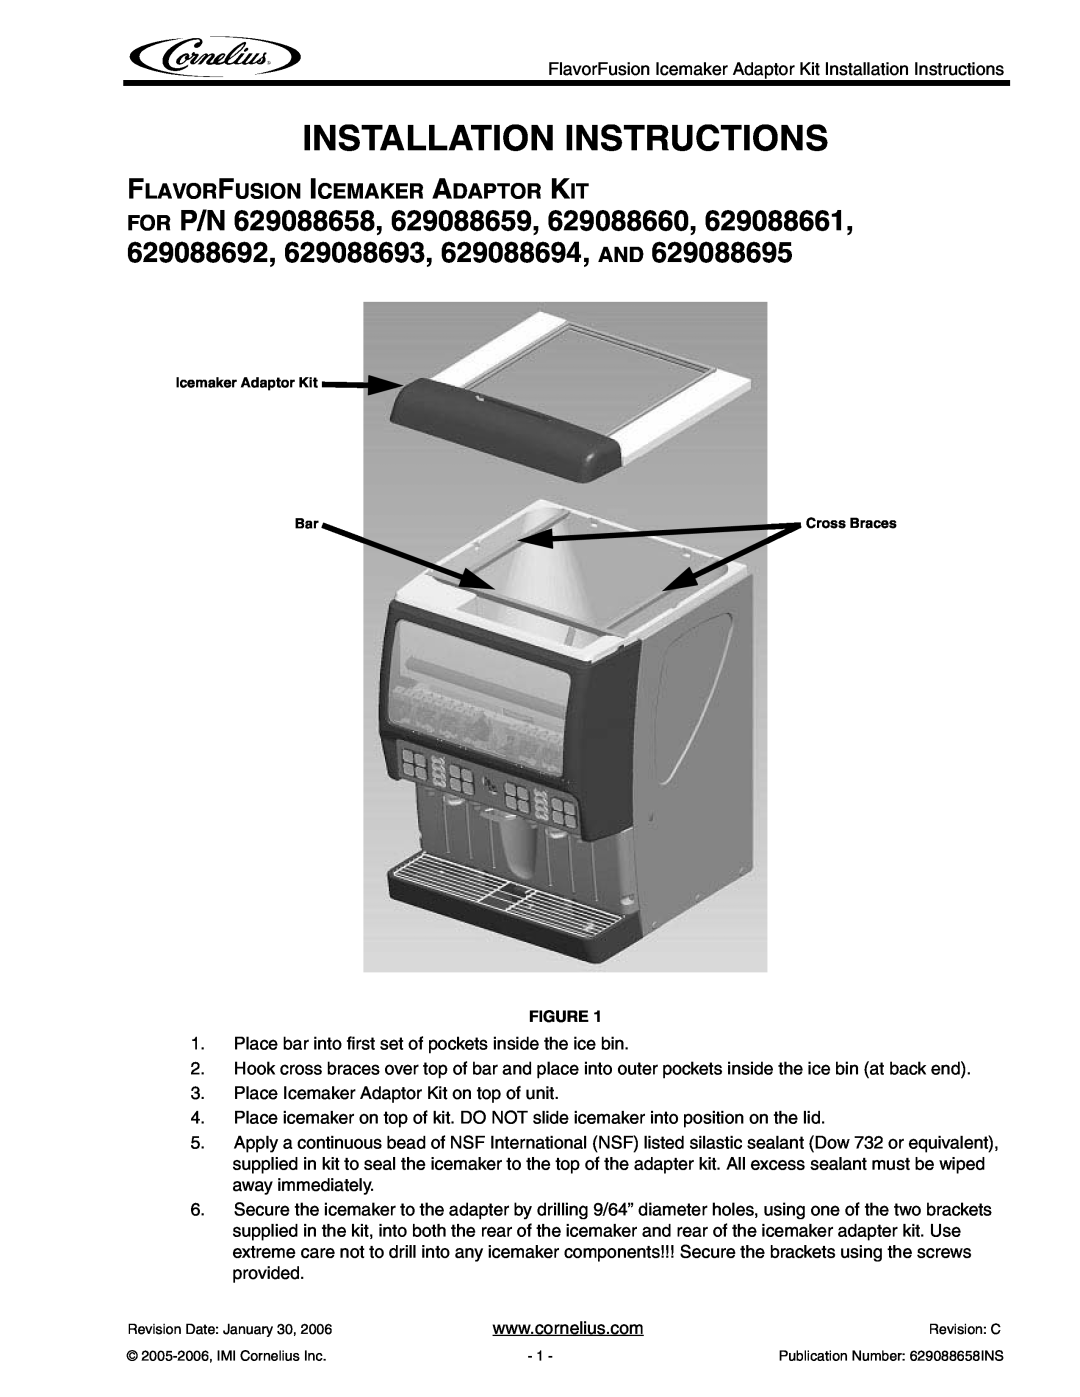 Cornelius none installation instructions Installation Instructions, Flavorfusion Icemaker Adaptor Kit 